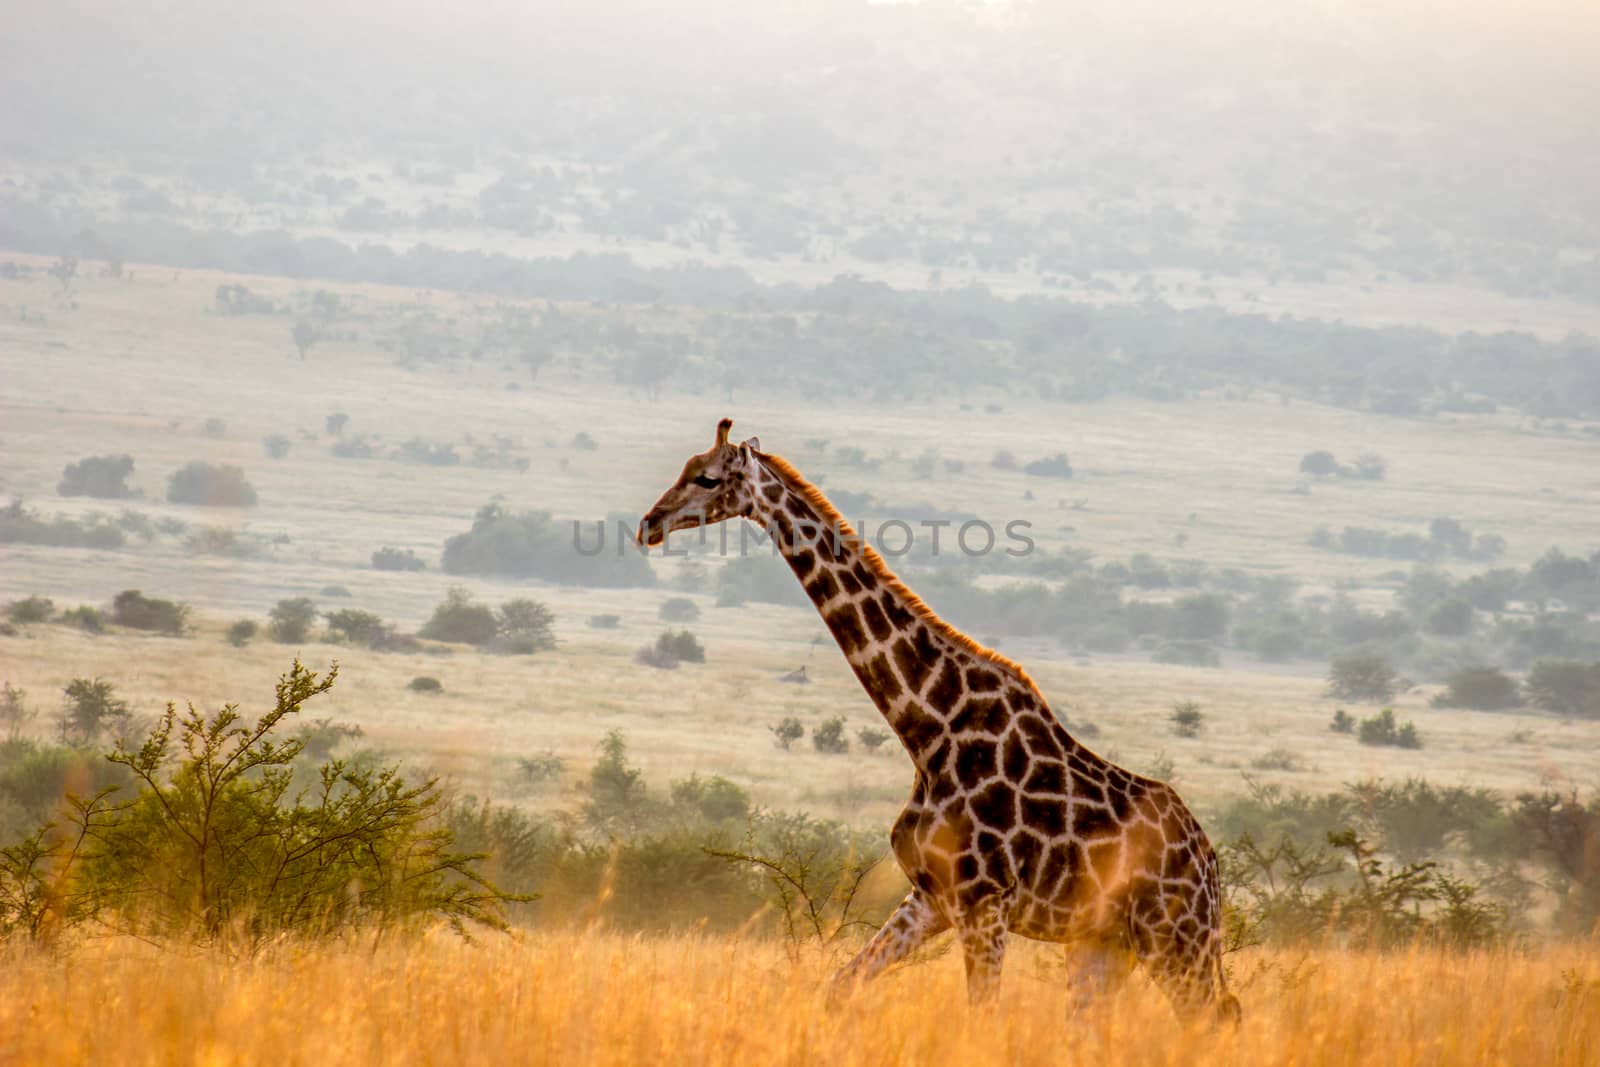 Giraffe walking in the morning sun by RiaanAlbrecht